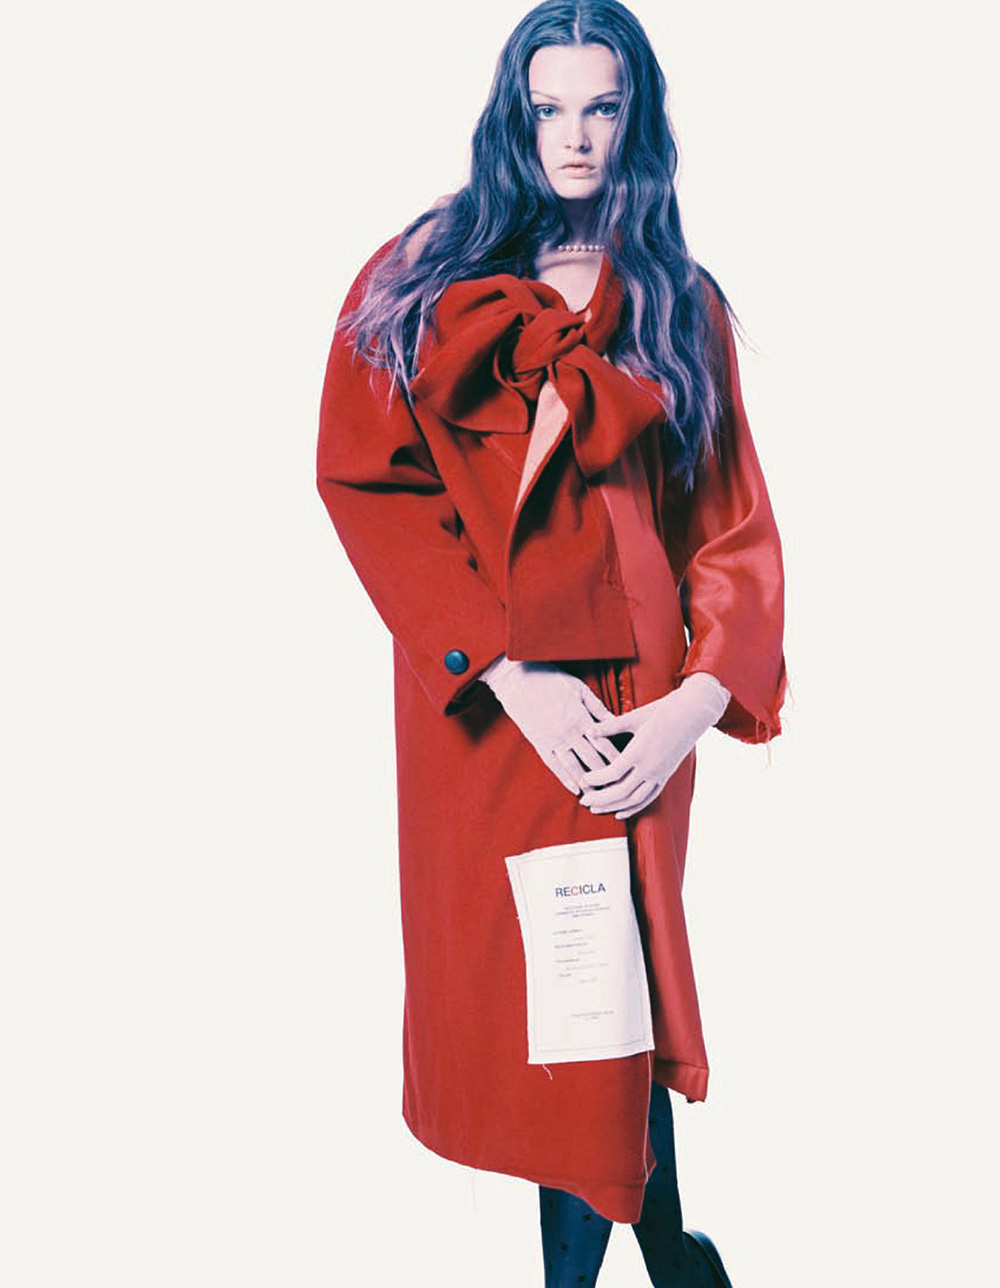 Lulu Tenney by Heji Shin for Vogue China November 2020